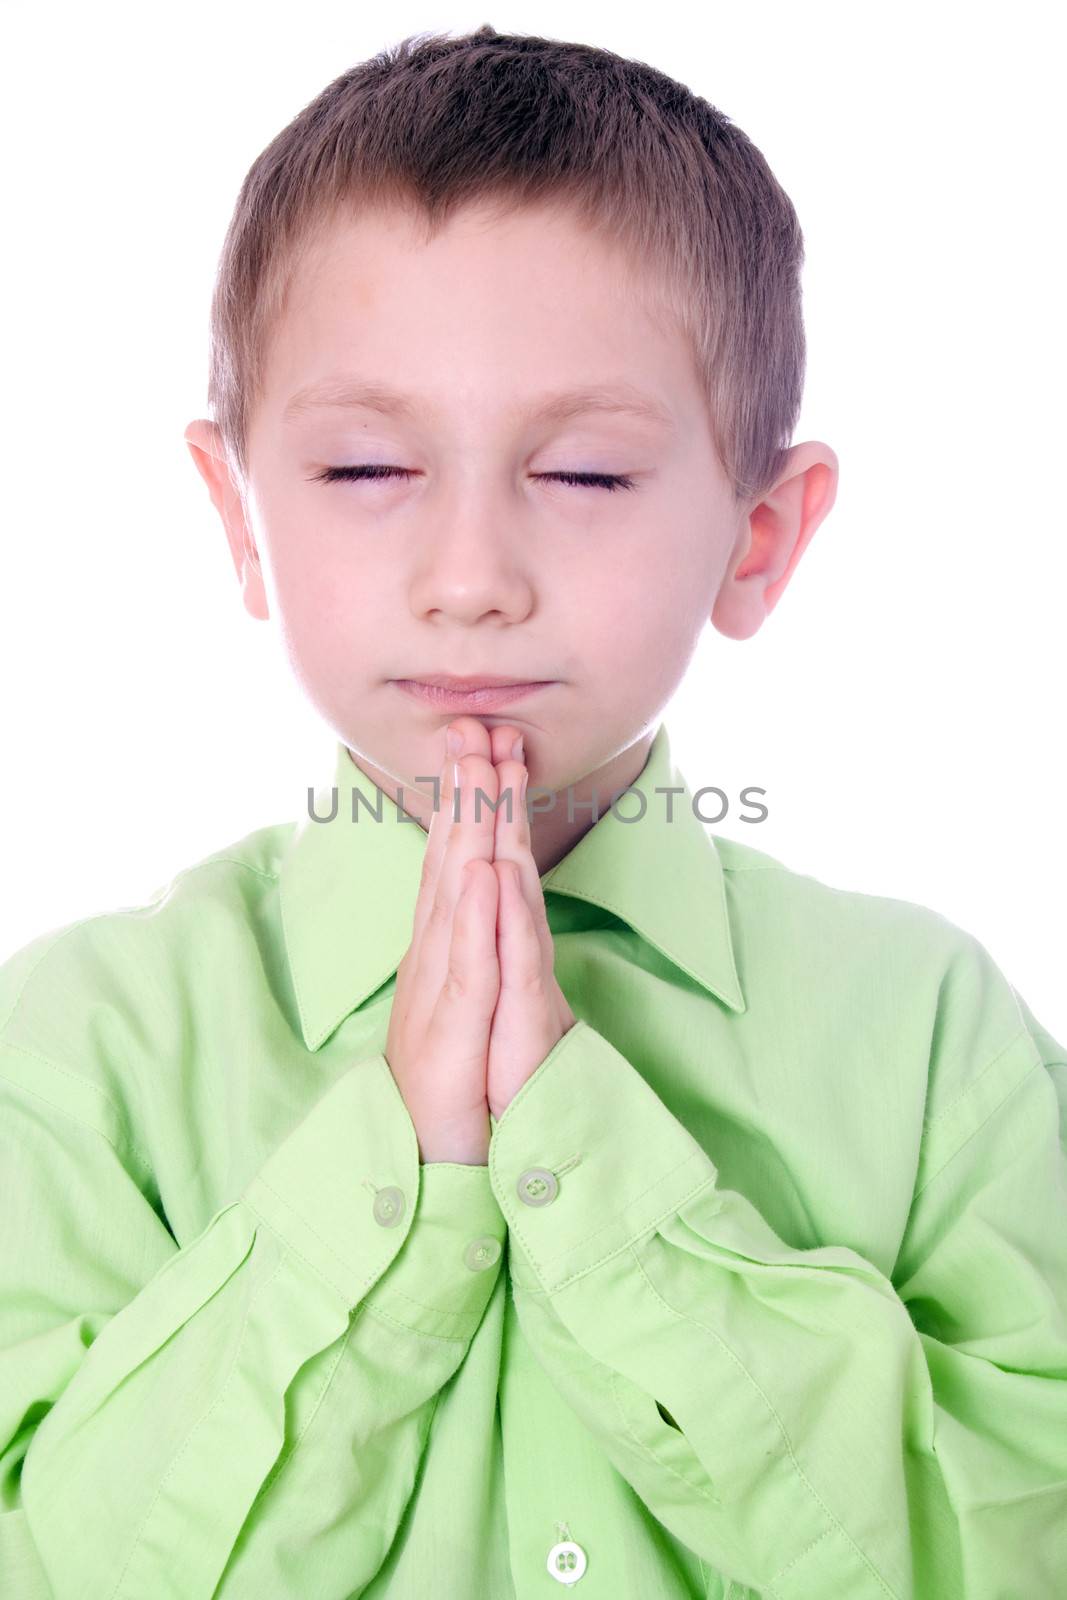 Christian Child praying isolated on white background